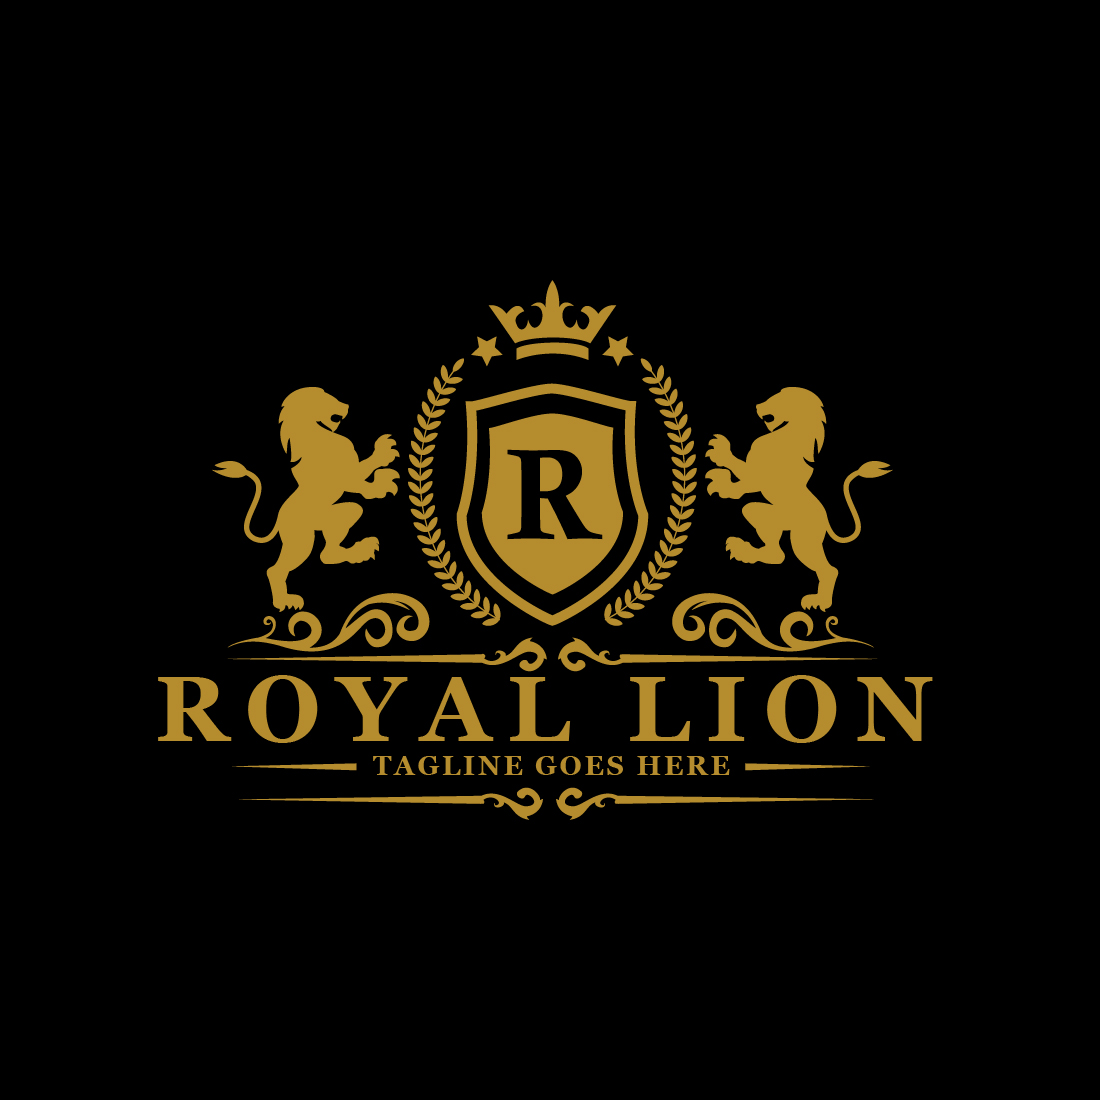 The royal lion logo on a black background.